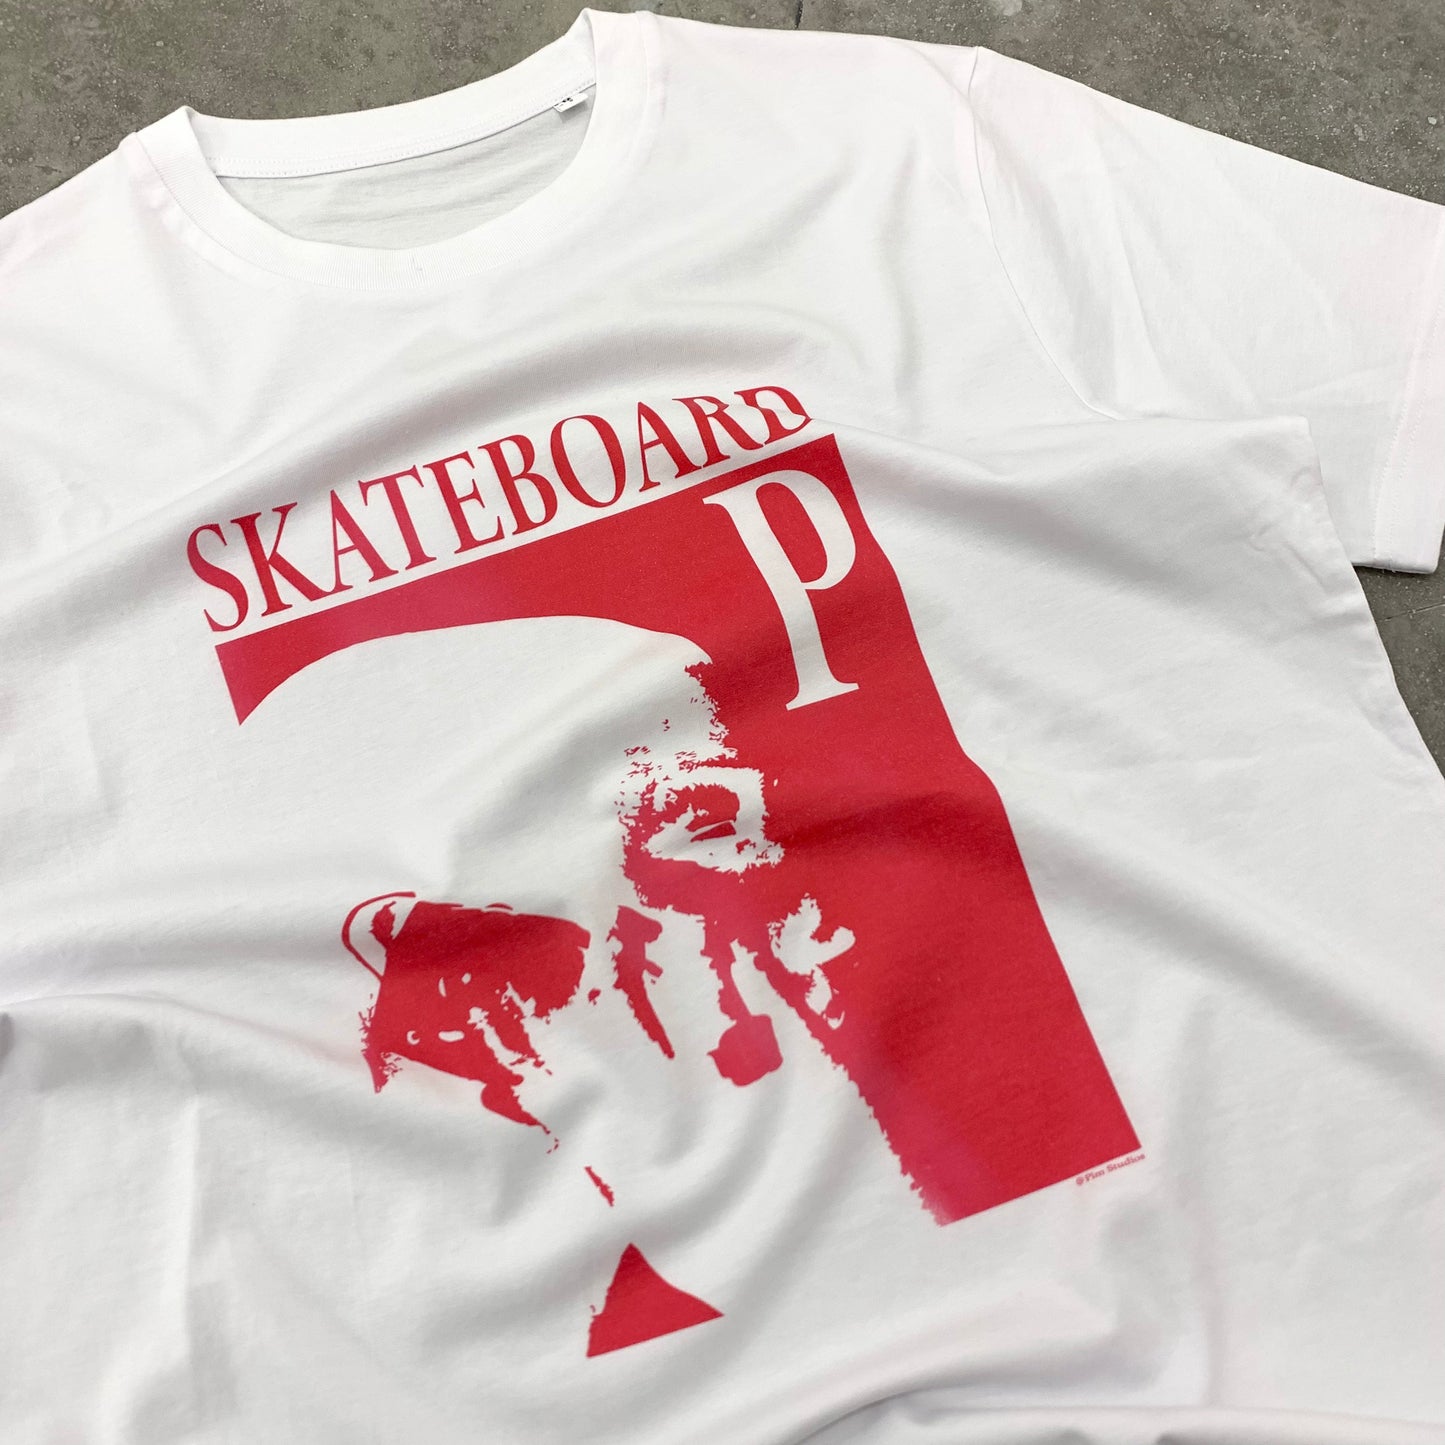 Skateboard P Tee